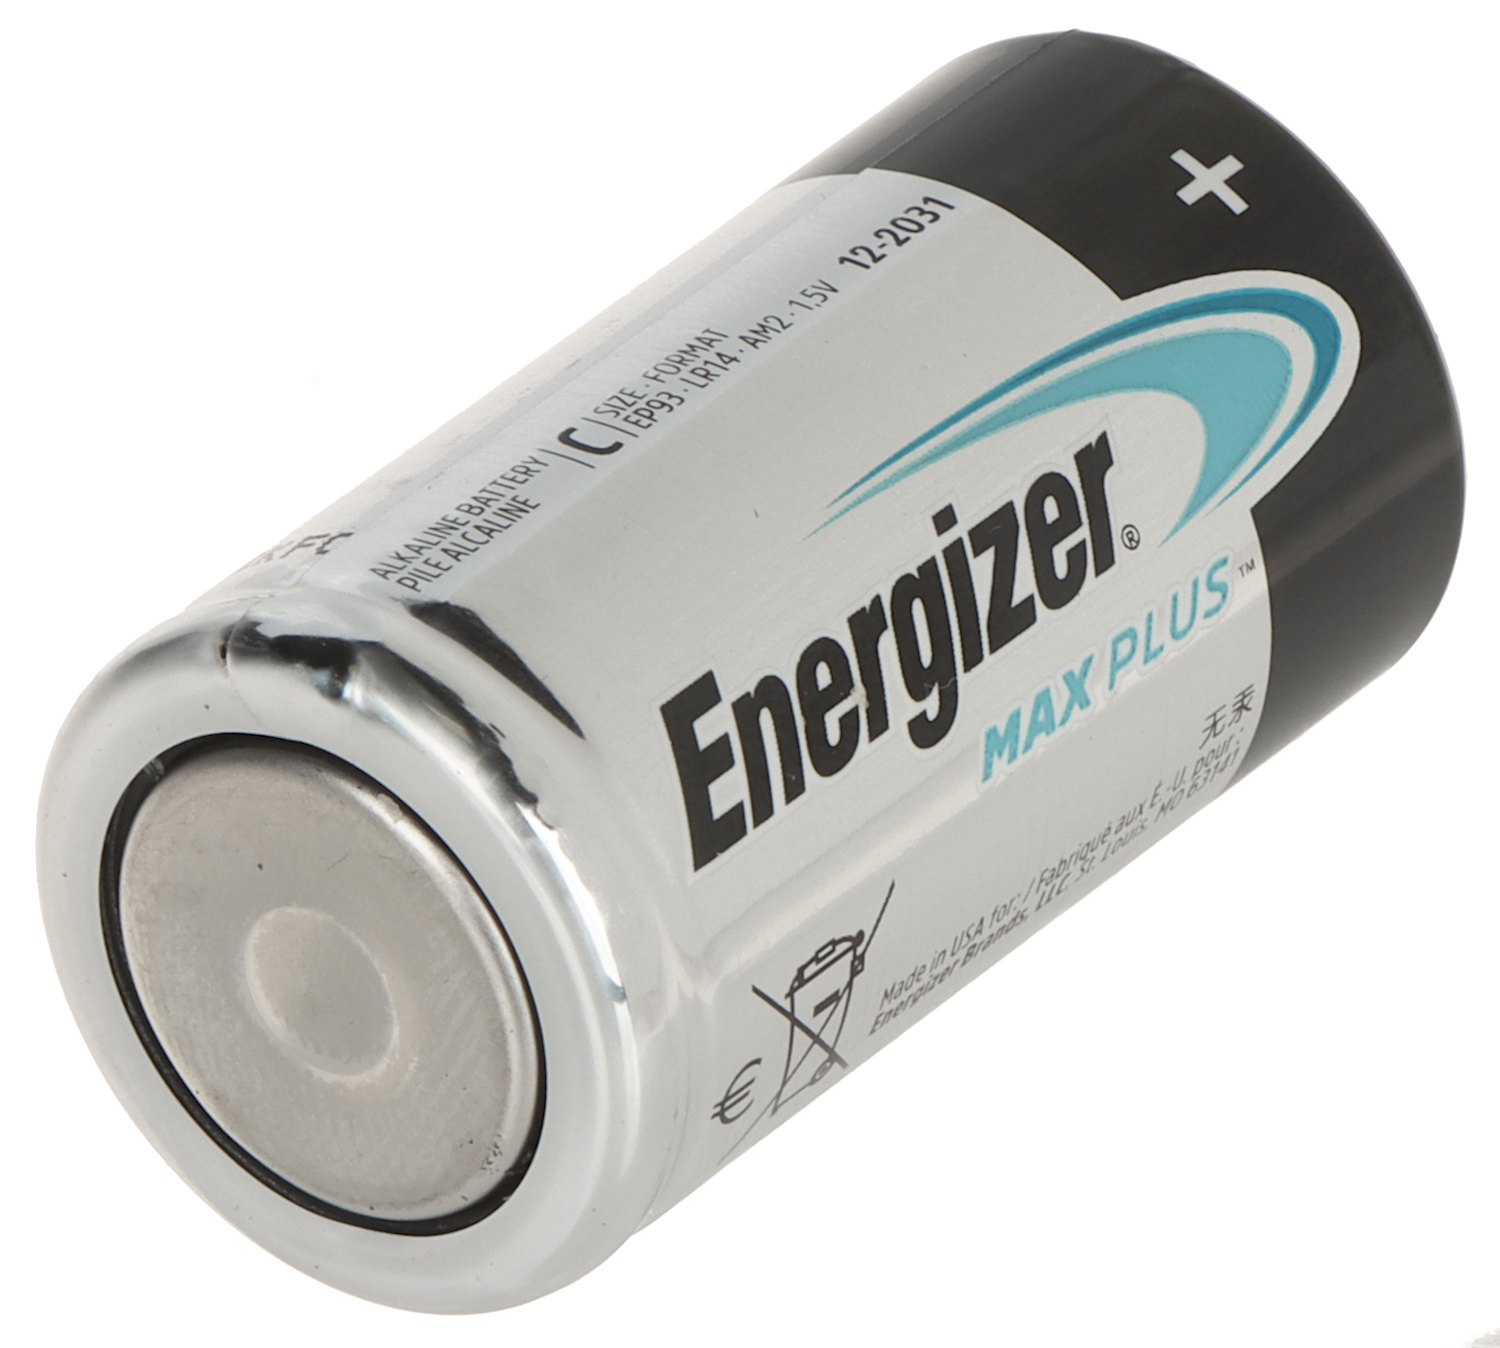 Battery Energizer C-LR14 2pcs